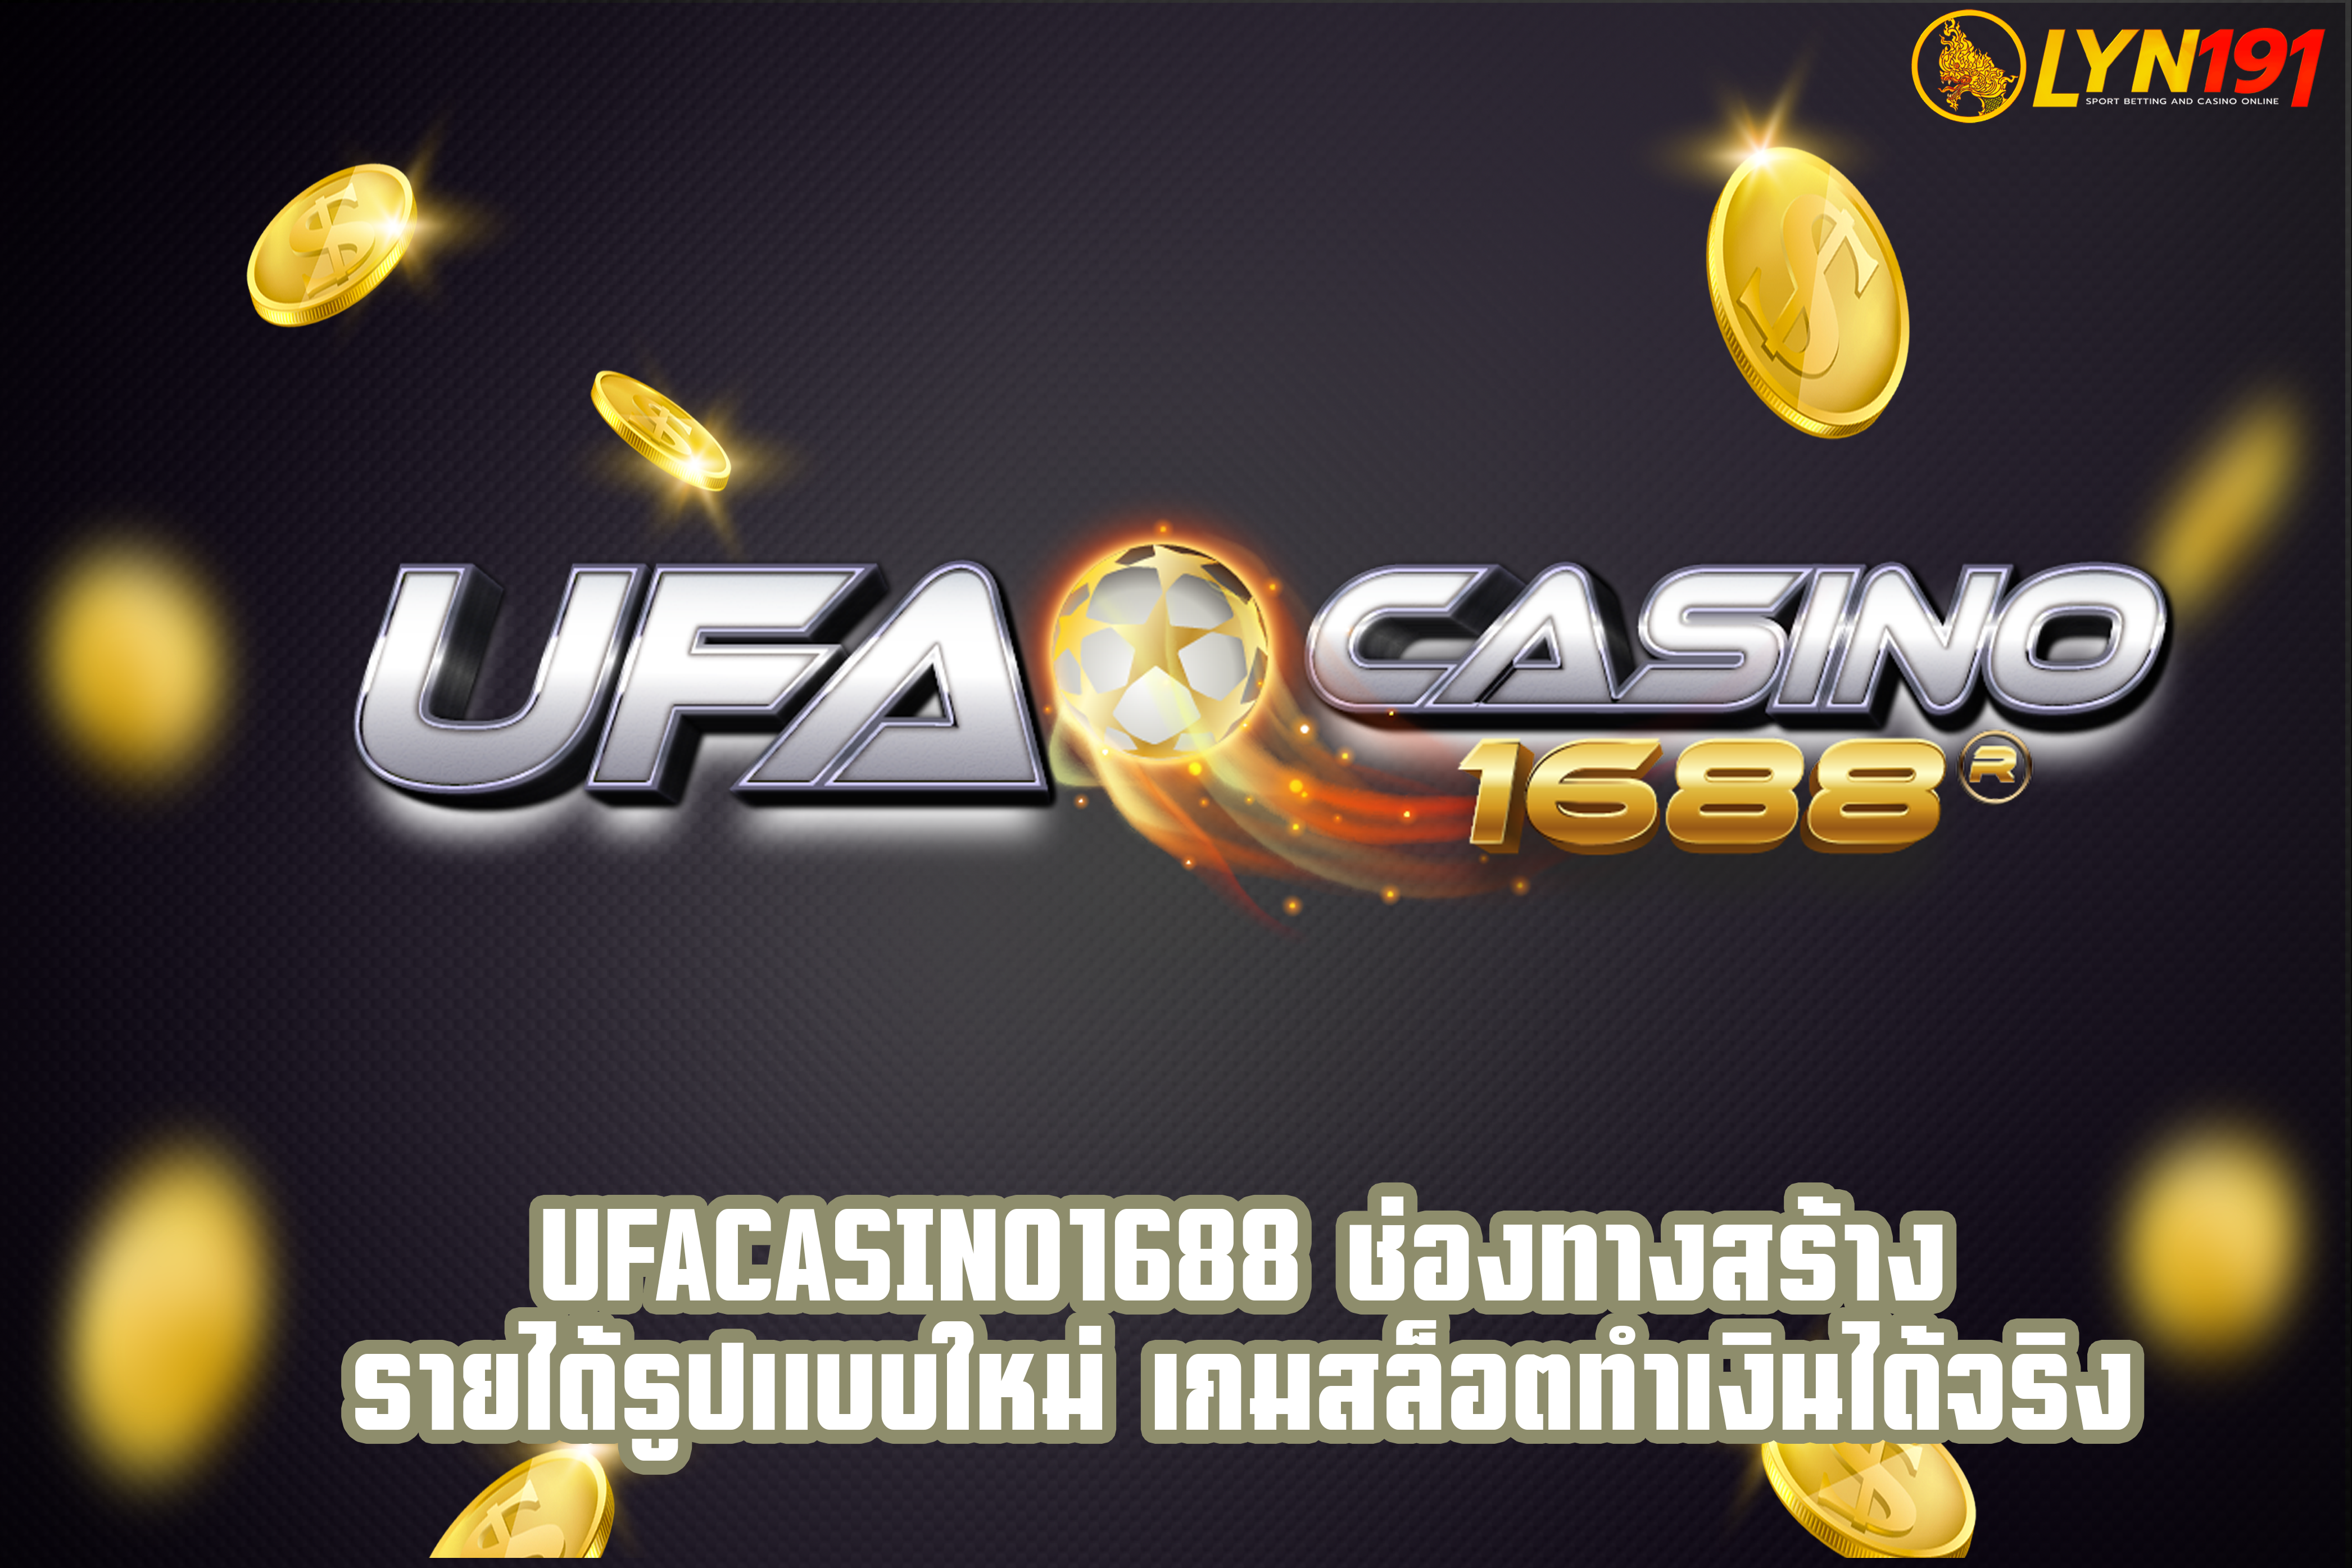 UFAcasino1688 ช่องทางสร้างรายได้รูปแบบใหม่ เกมสล็อตทำเงินได้จริง